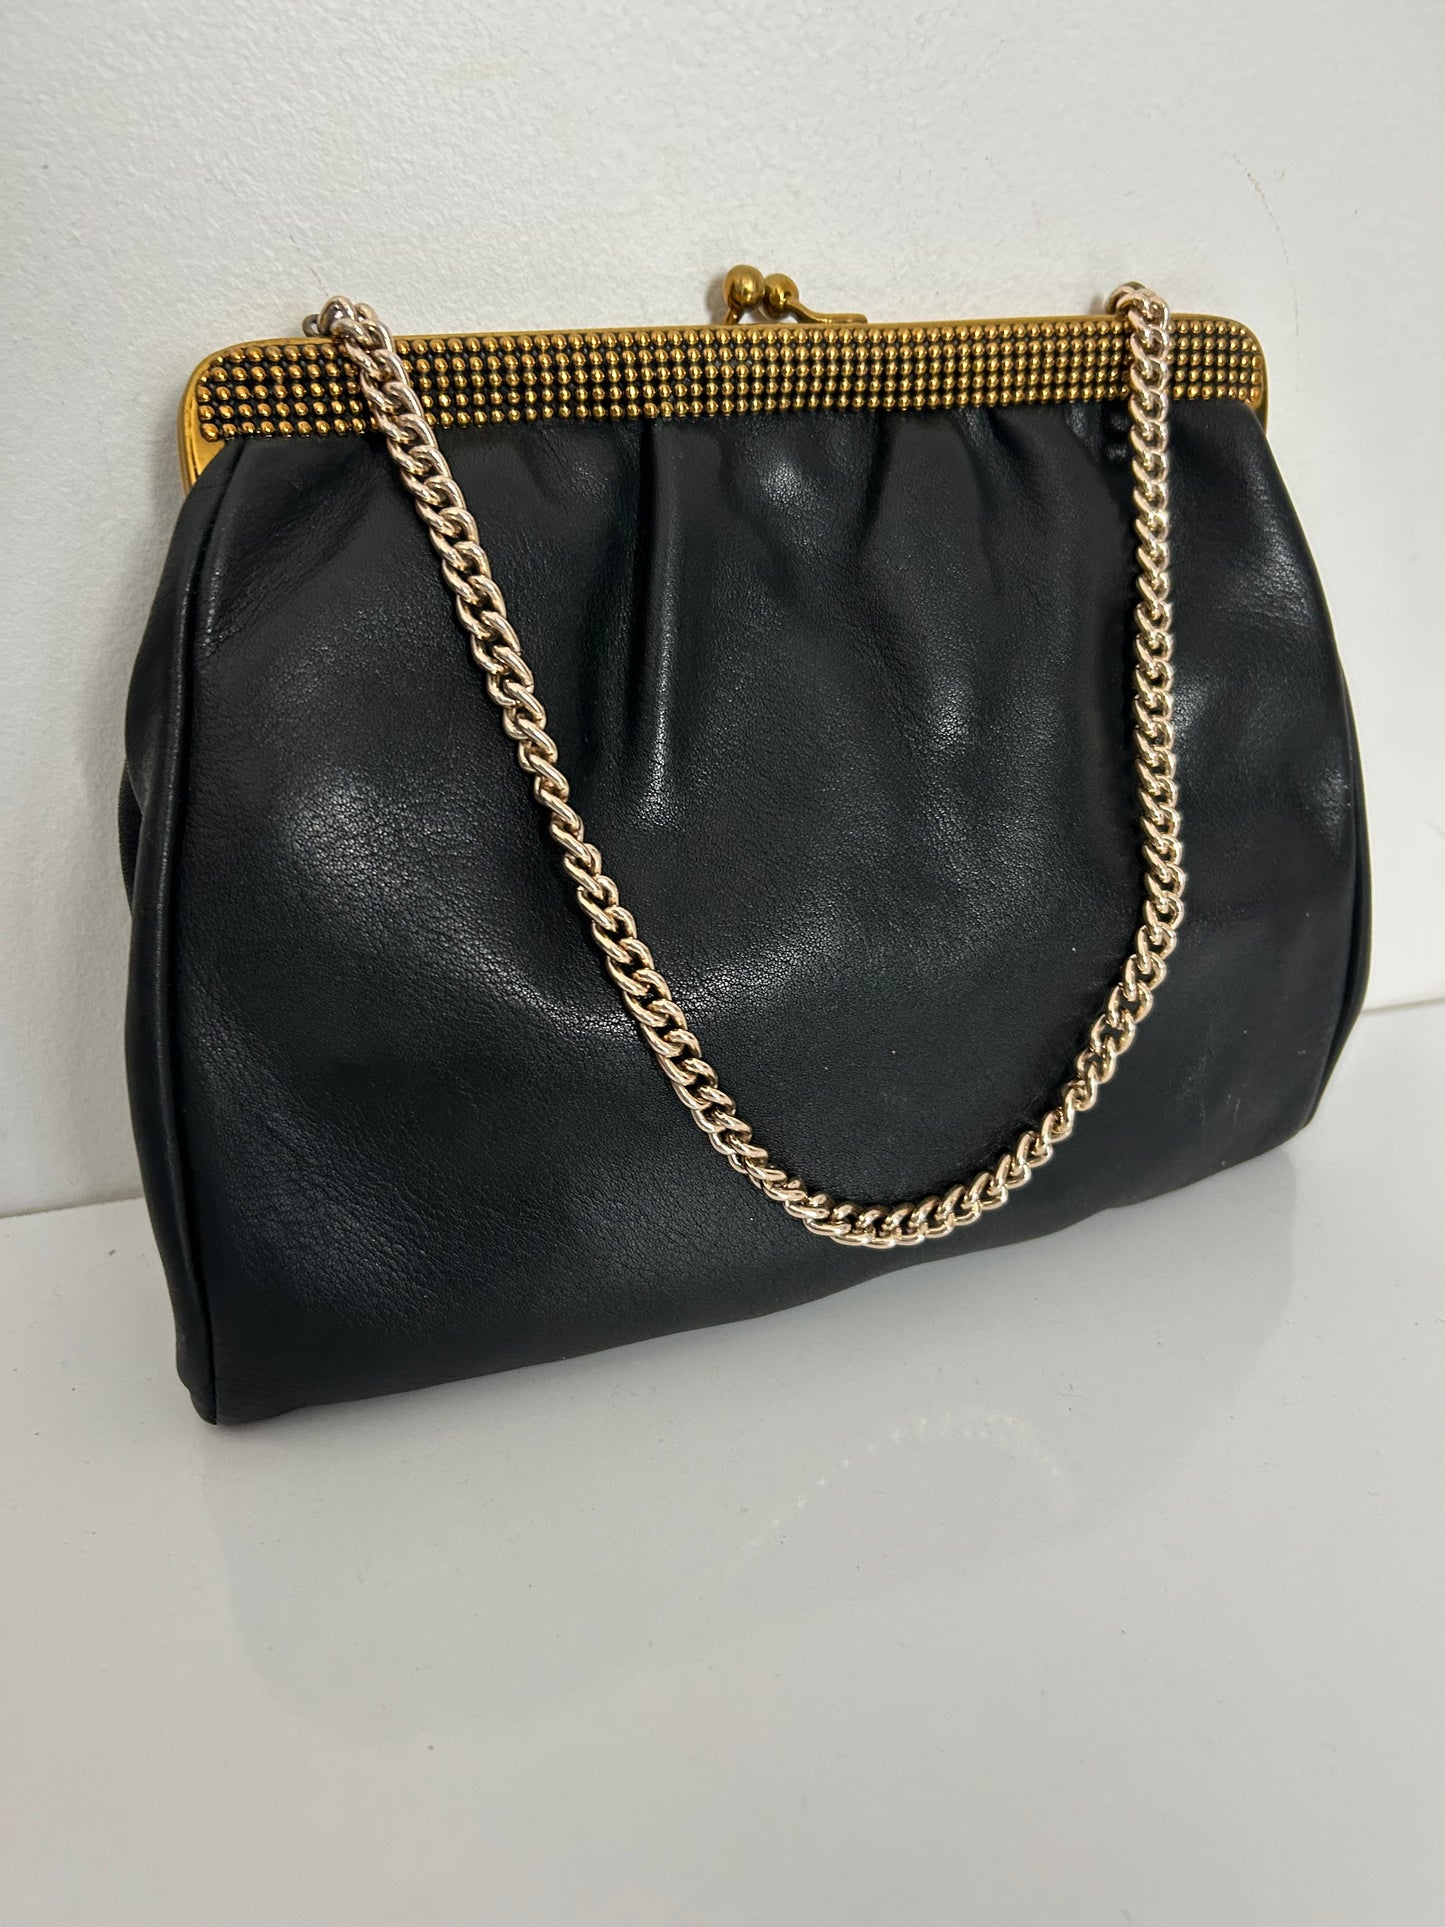 Vintage 1950s Black Leather Gold Tone Frame Chain Handle Evening Bag